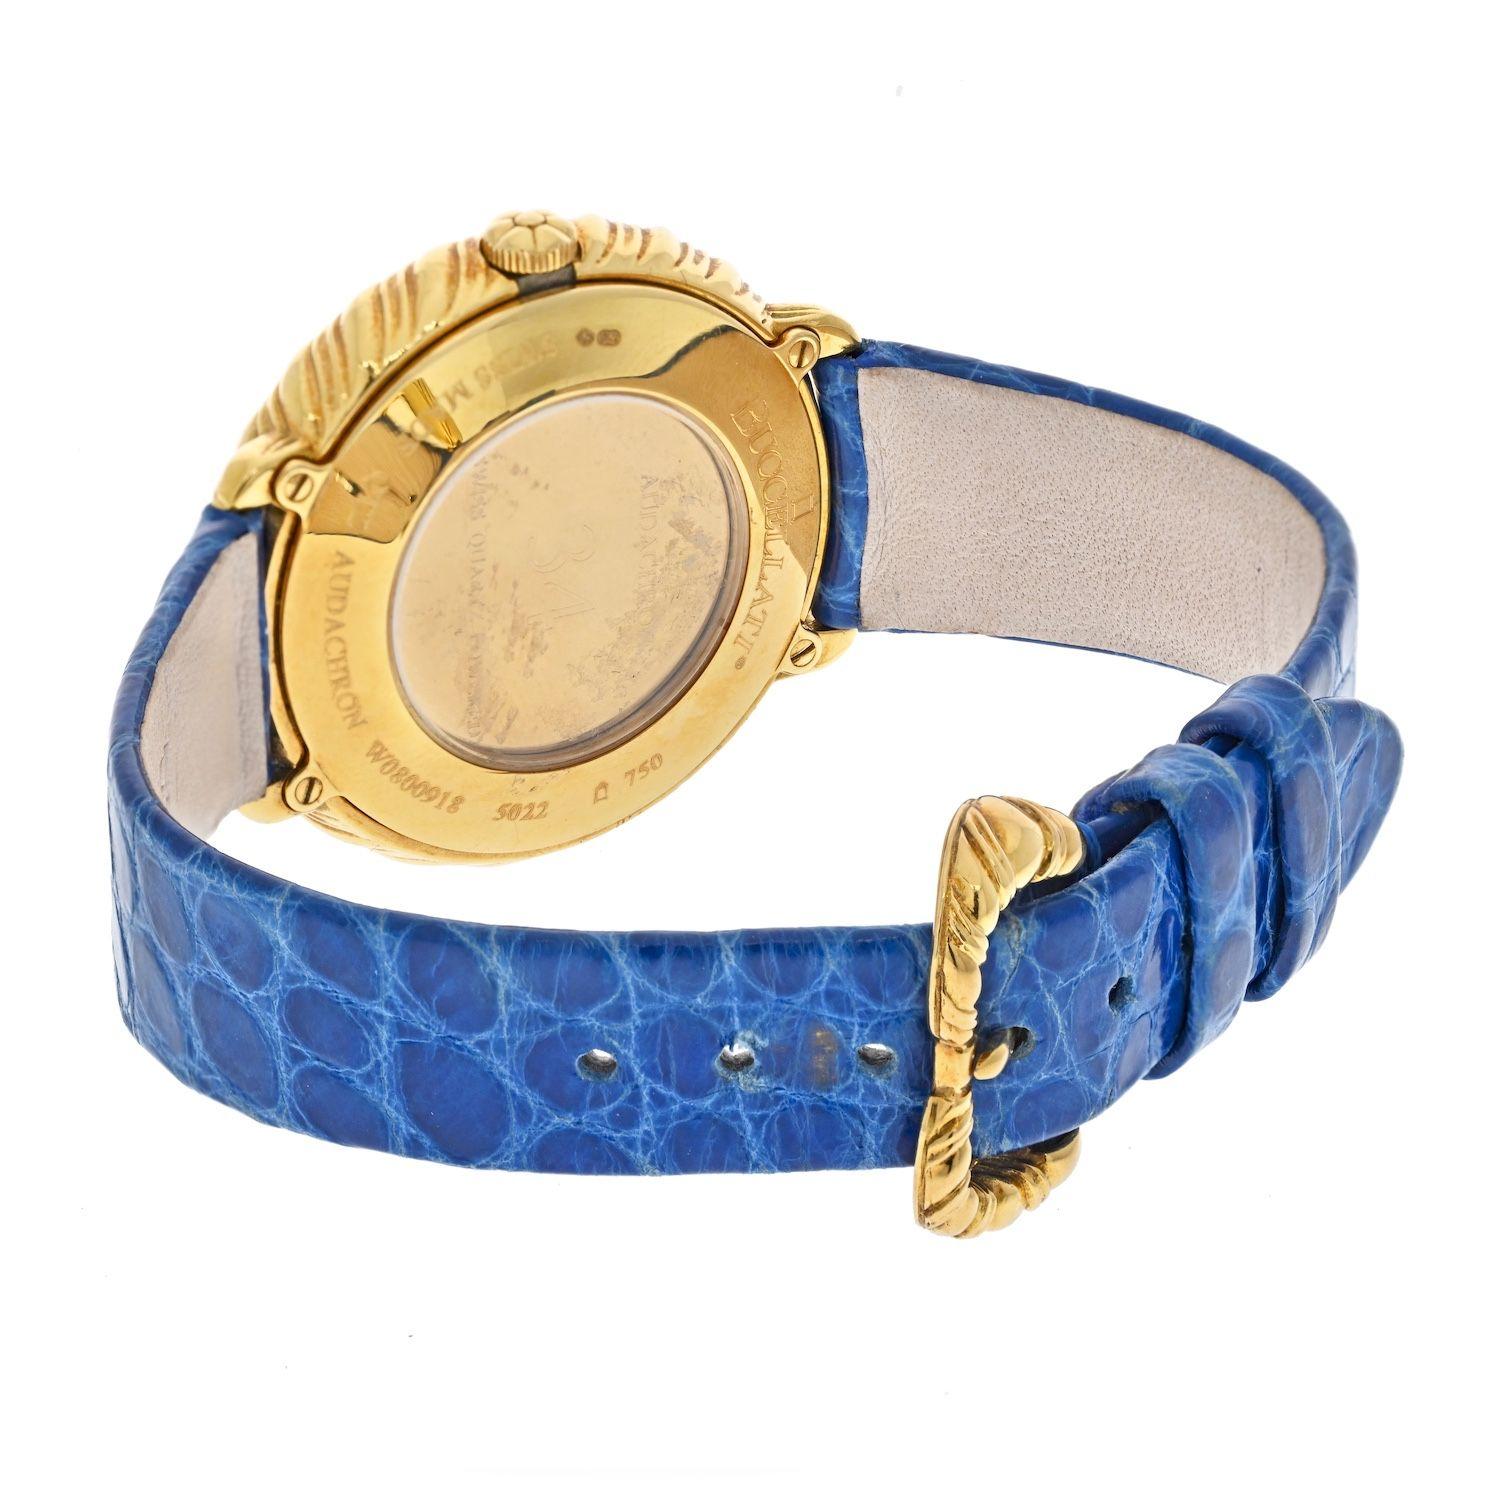 Modern Buccellati 18K Yellow Gold Audachron Blue Leather Quartz Watch